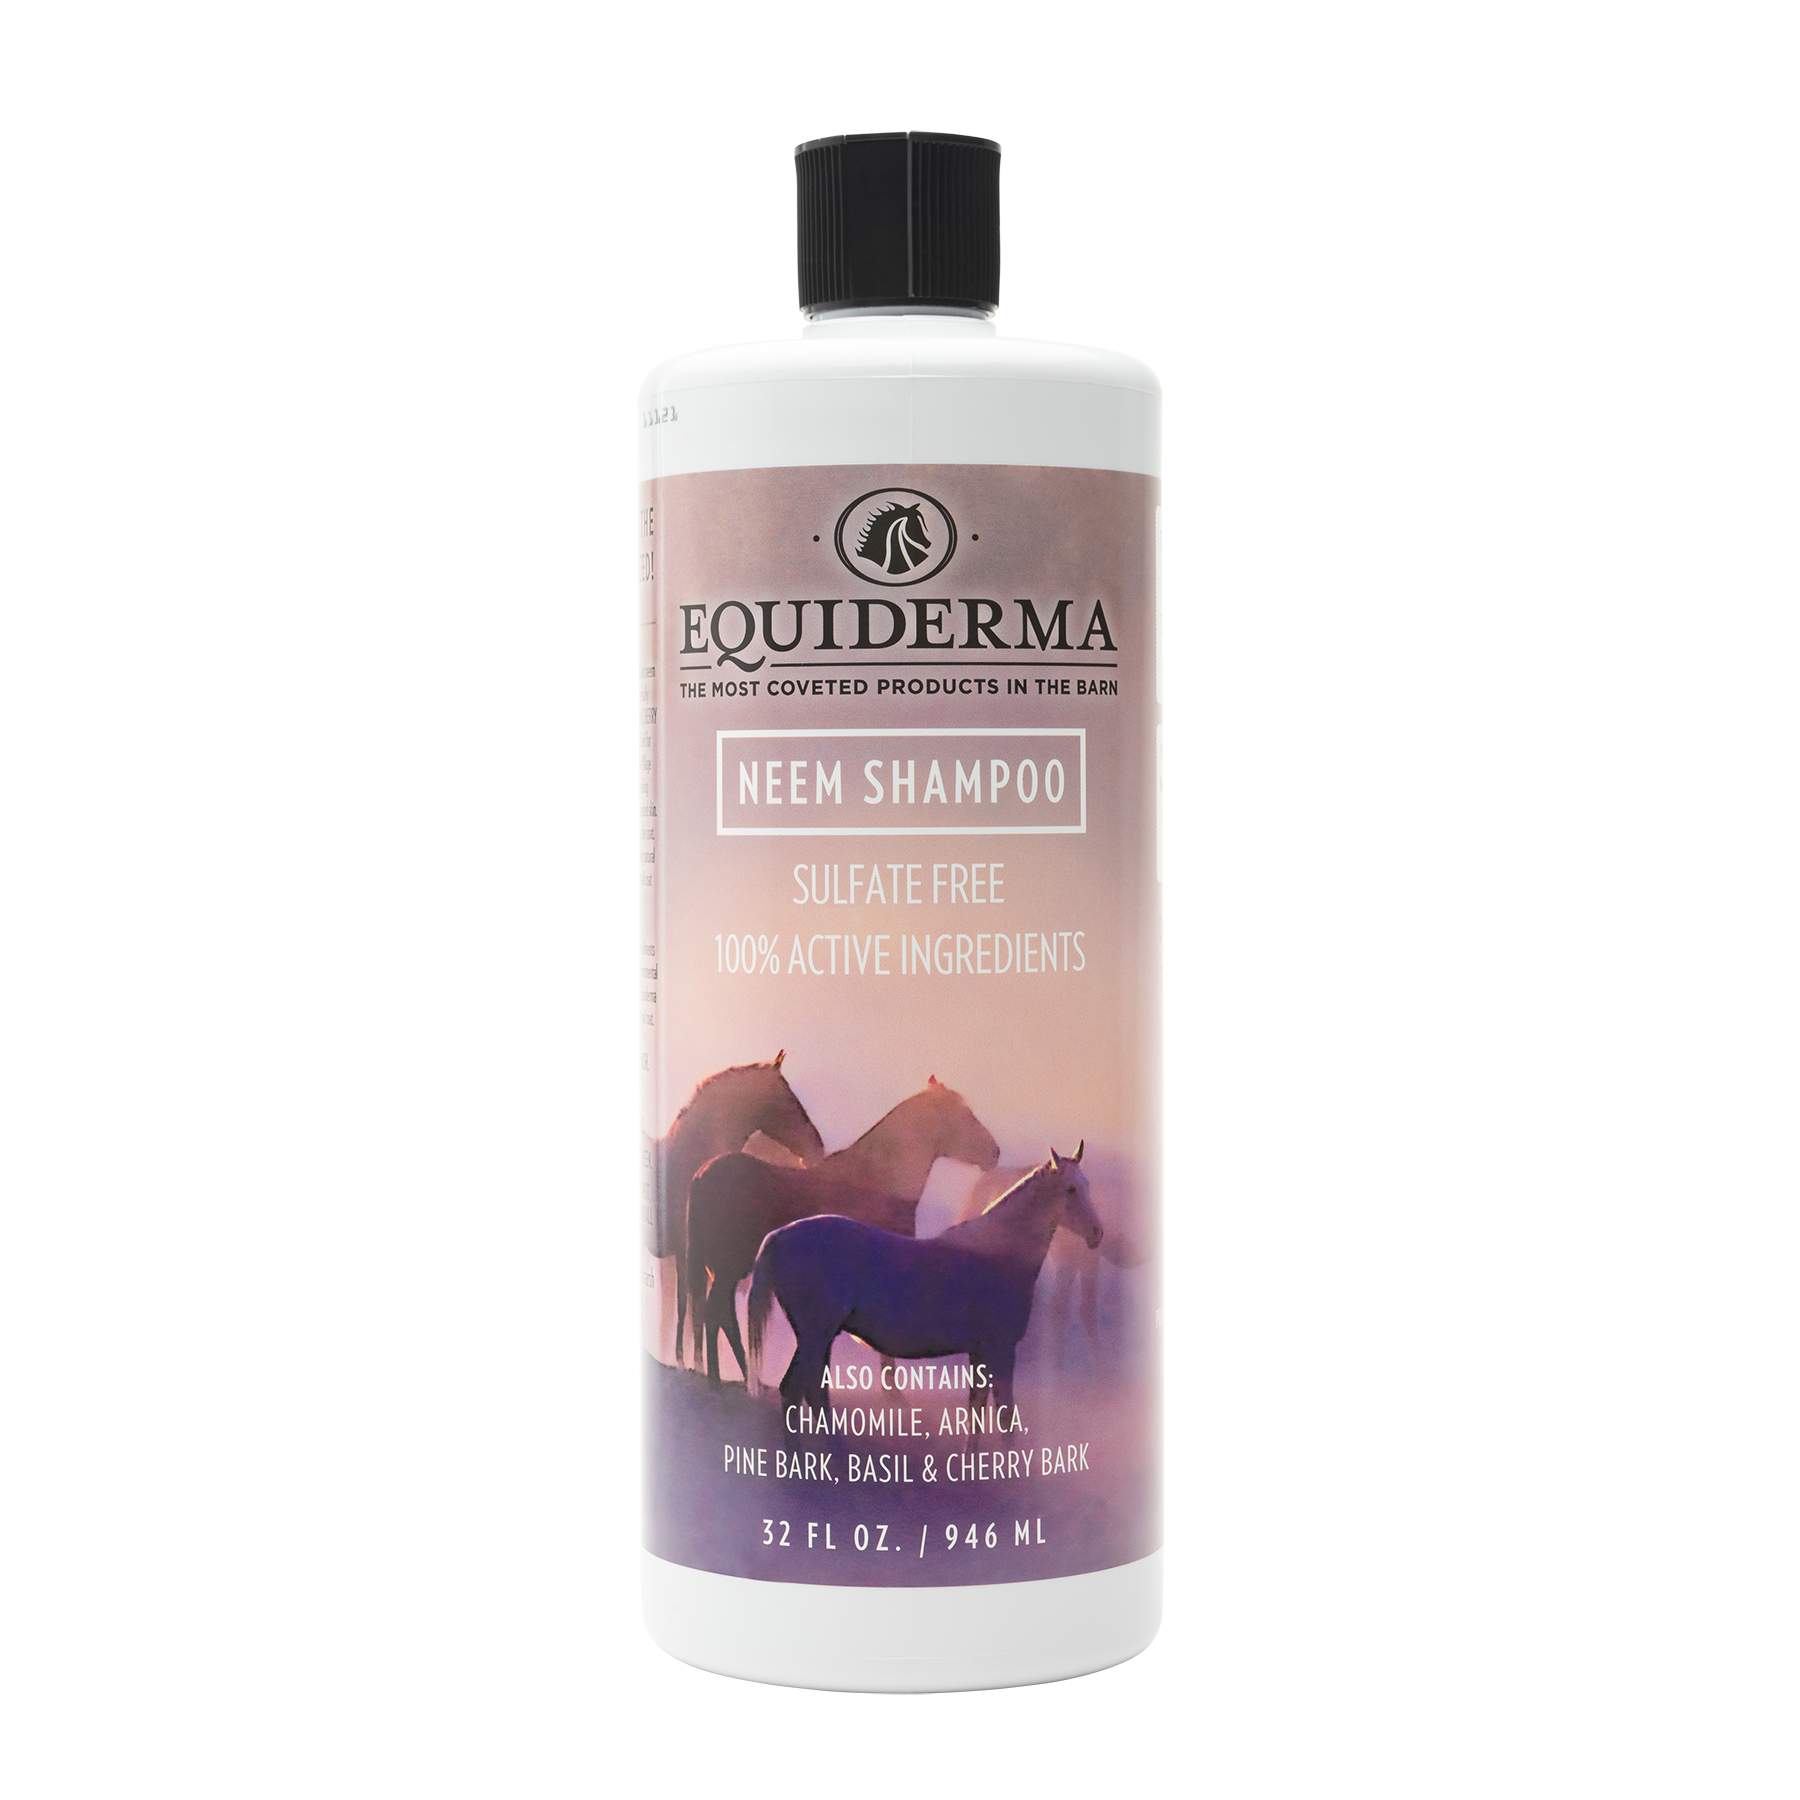 Neem & Arnica Sulfate Free Shampoo for Horses Equiderma